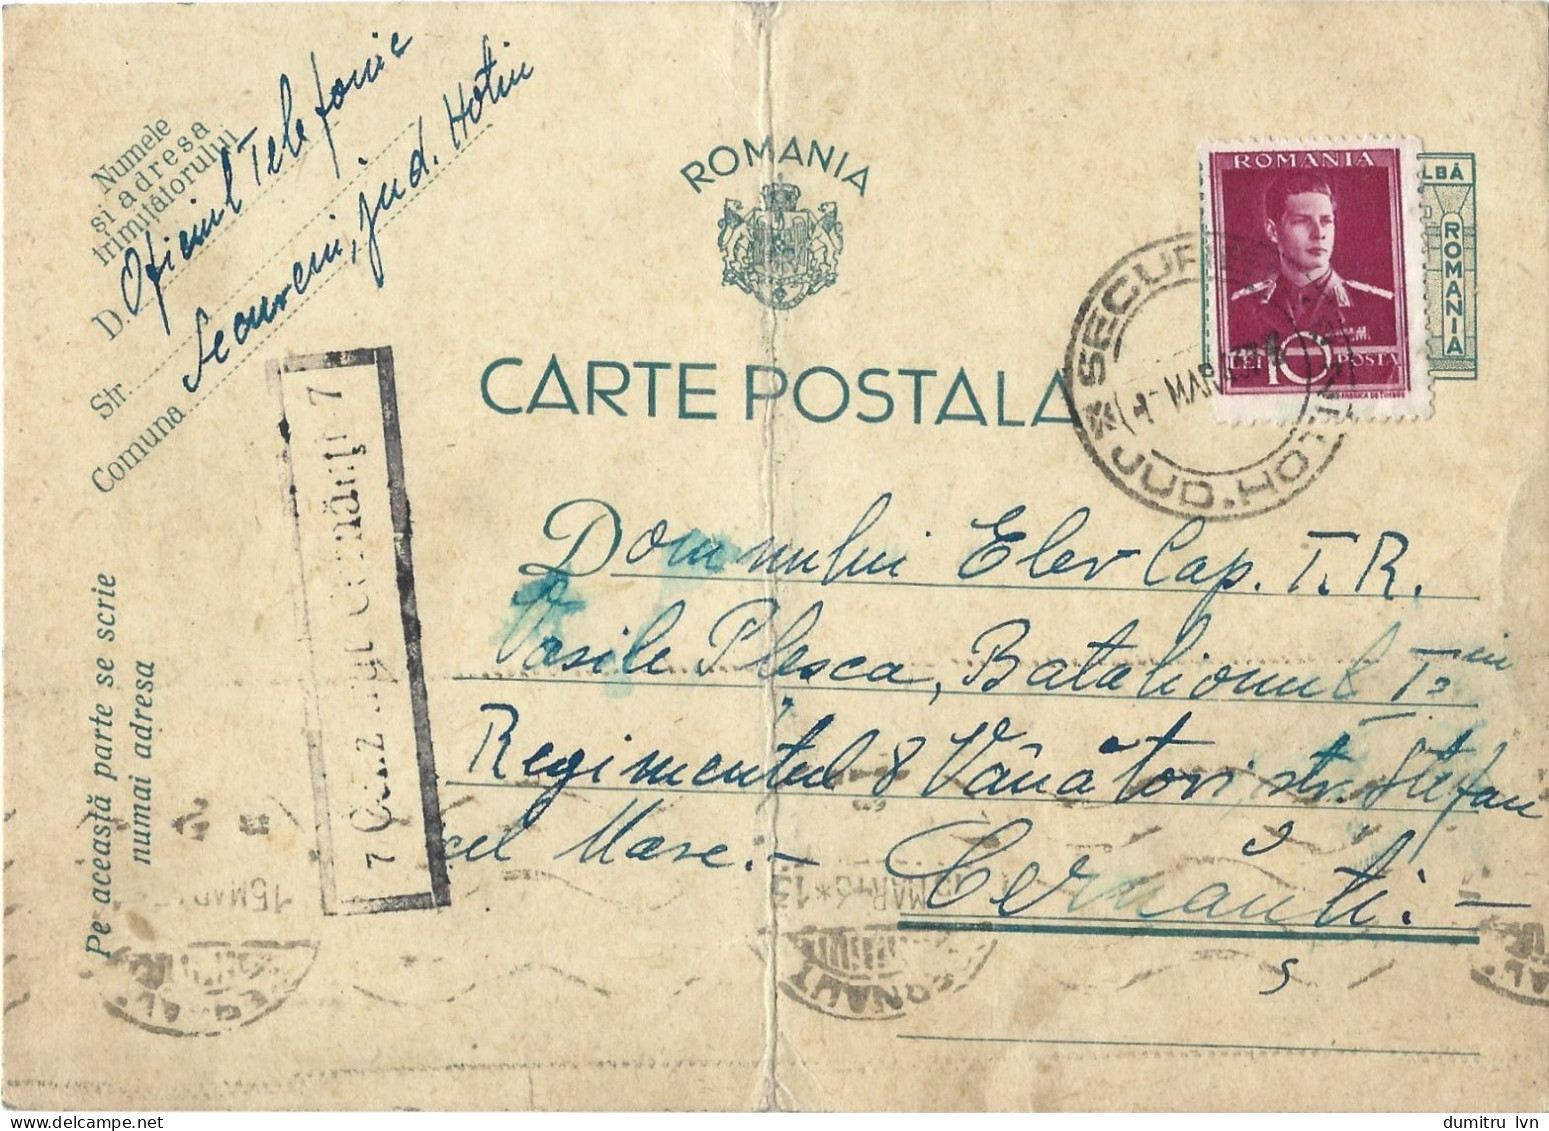 ROMANIA 1943 POSTCARD, CENSORED CERNAUTI 7, POSTCARD STATIONERY - World War 2 Letters